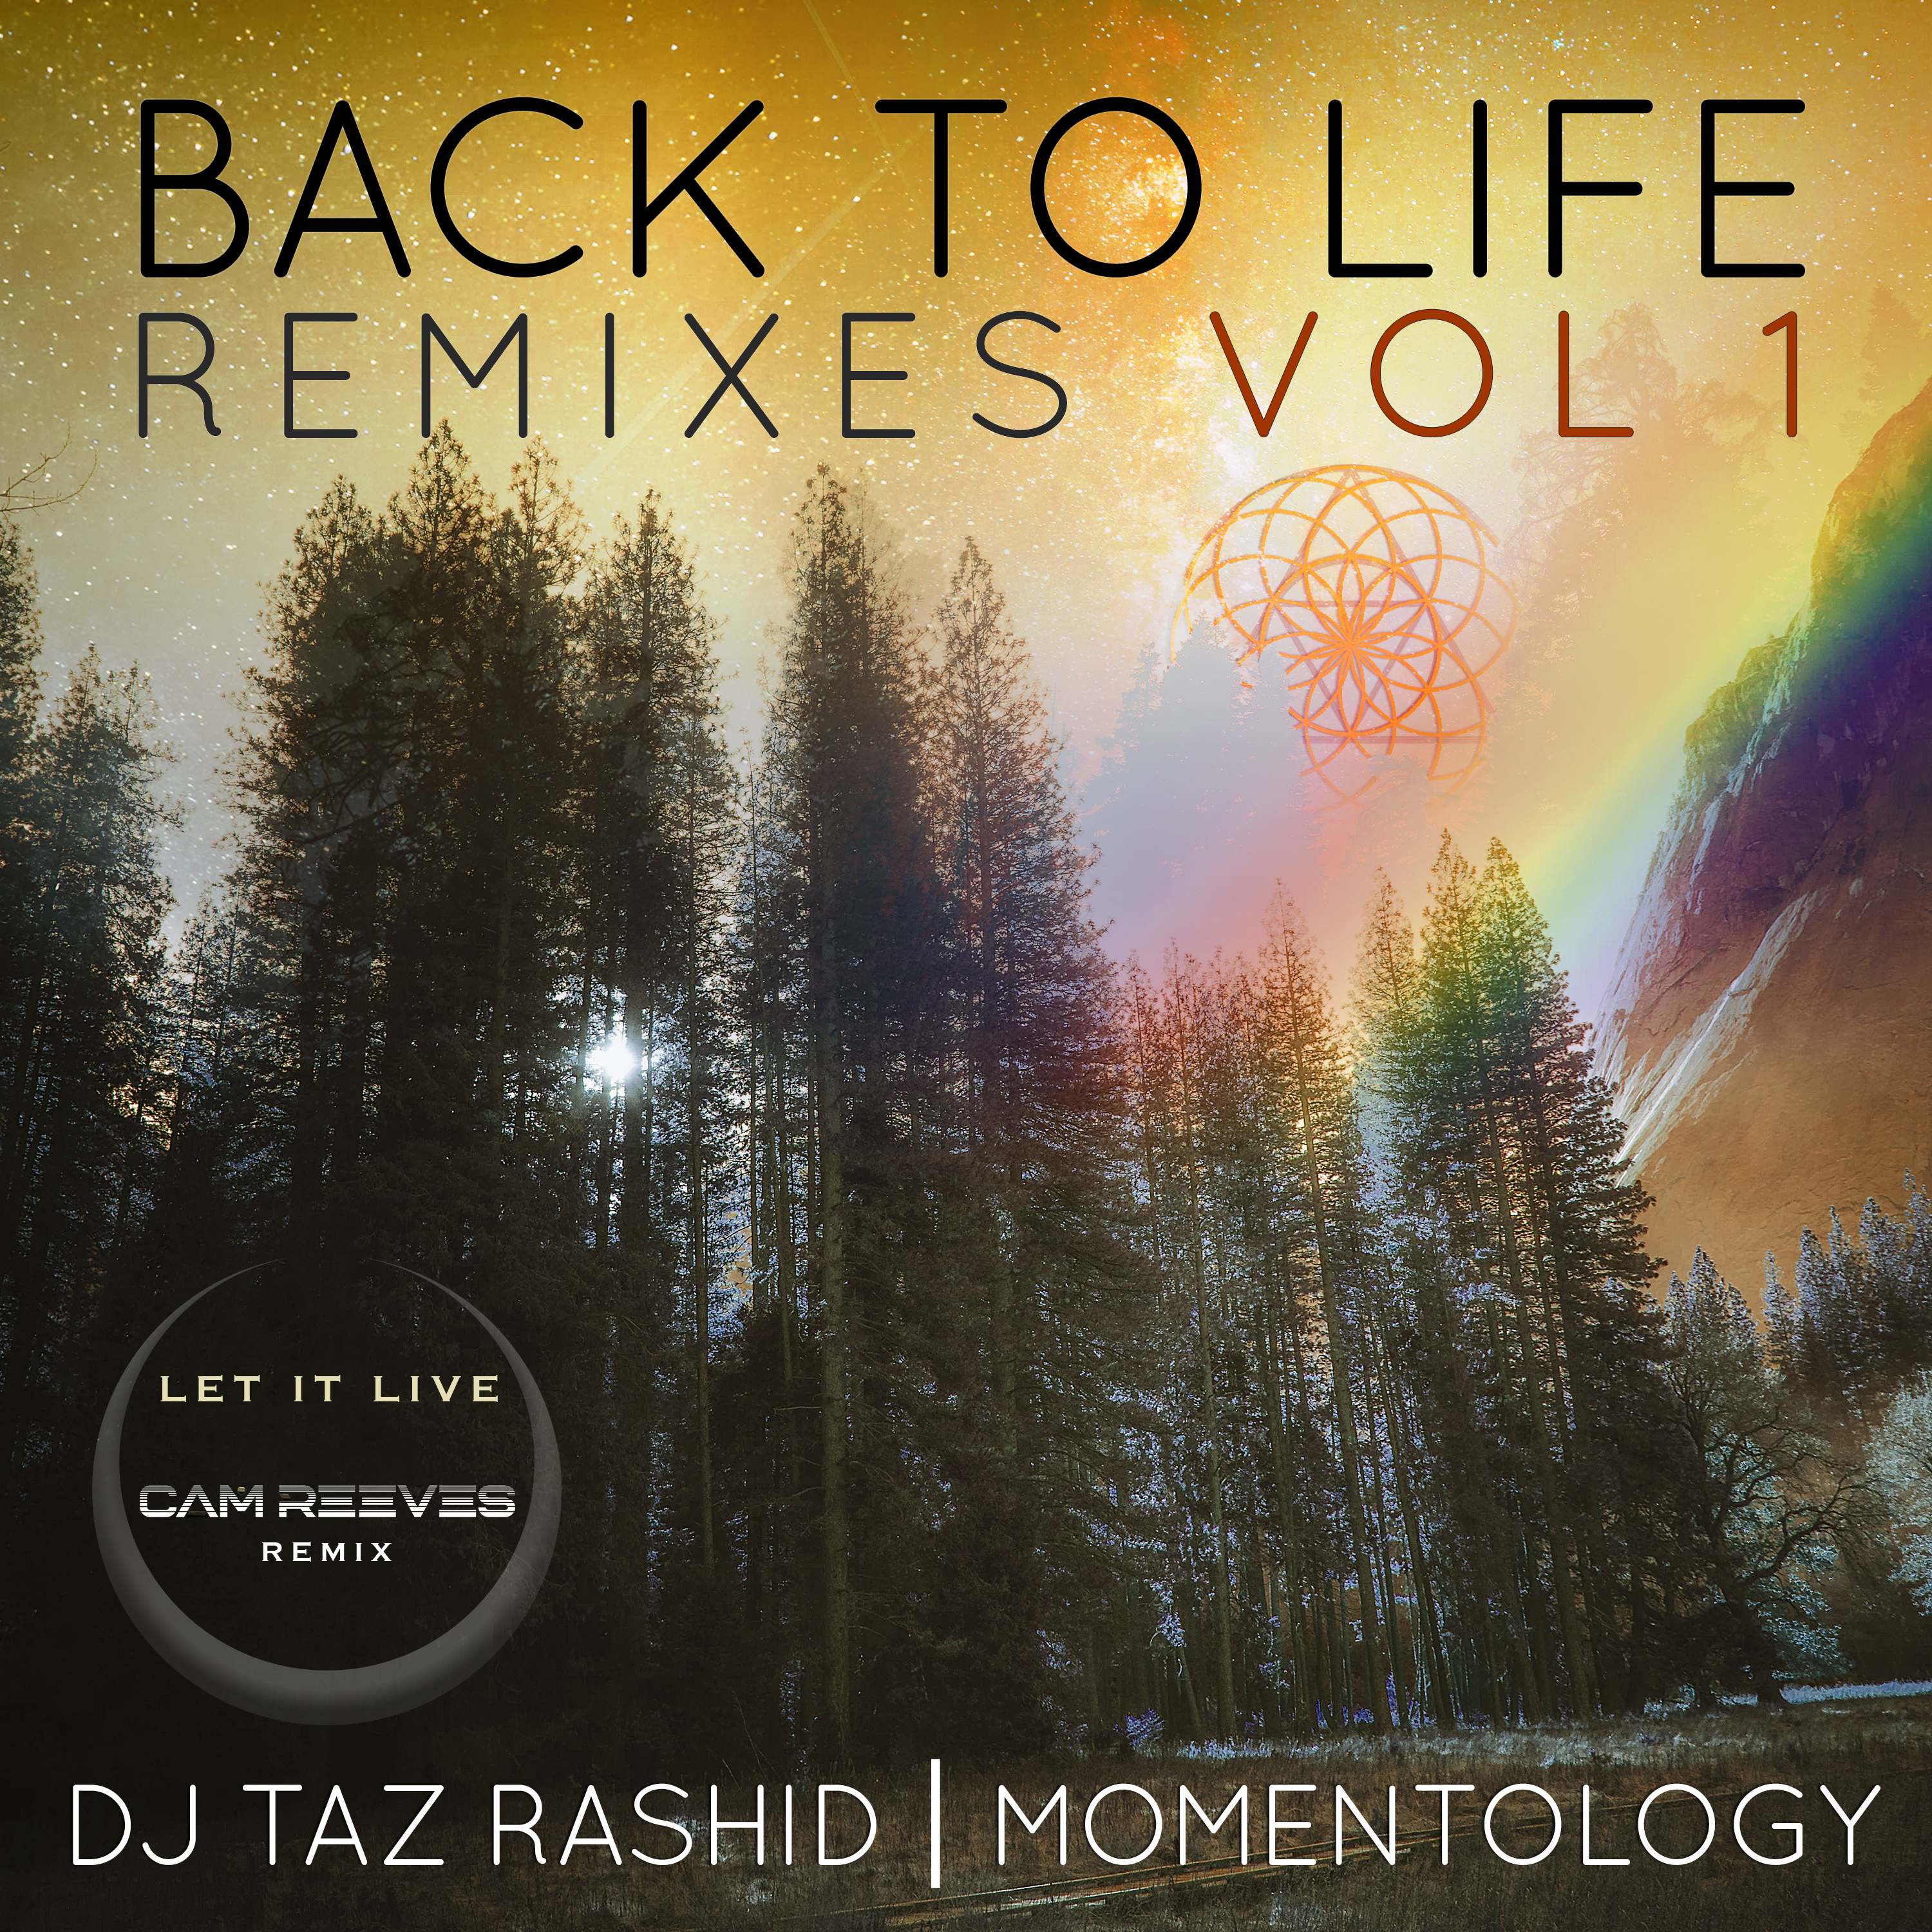 Momentology and DJ Taz Rashid - Let It Live - Cam Reeves Remix